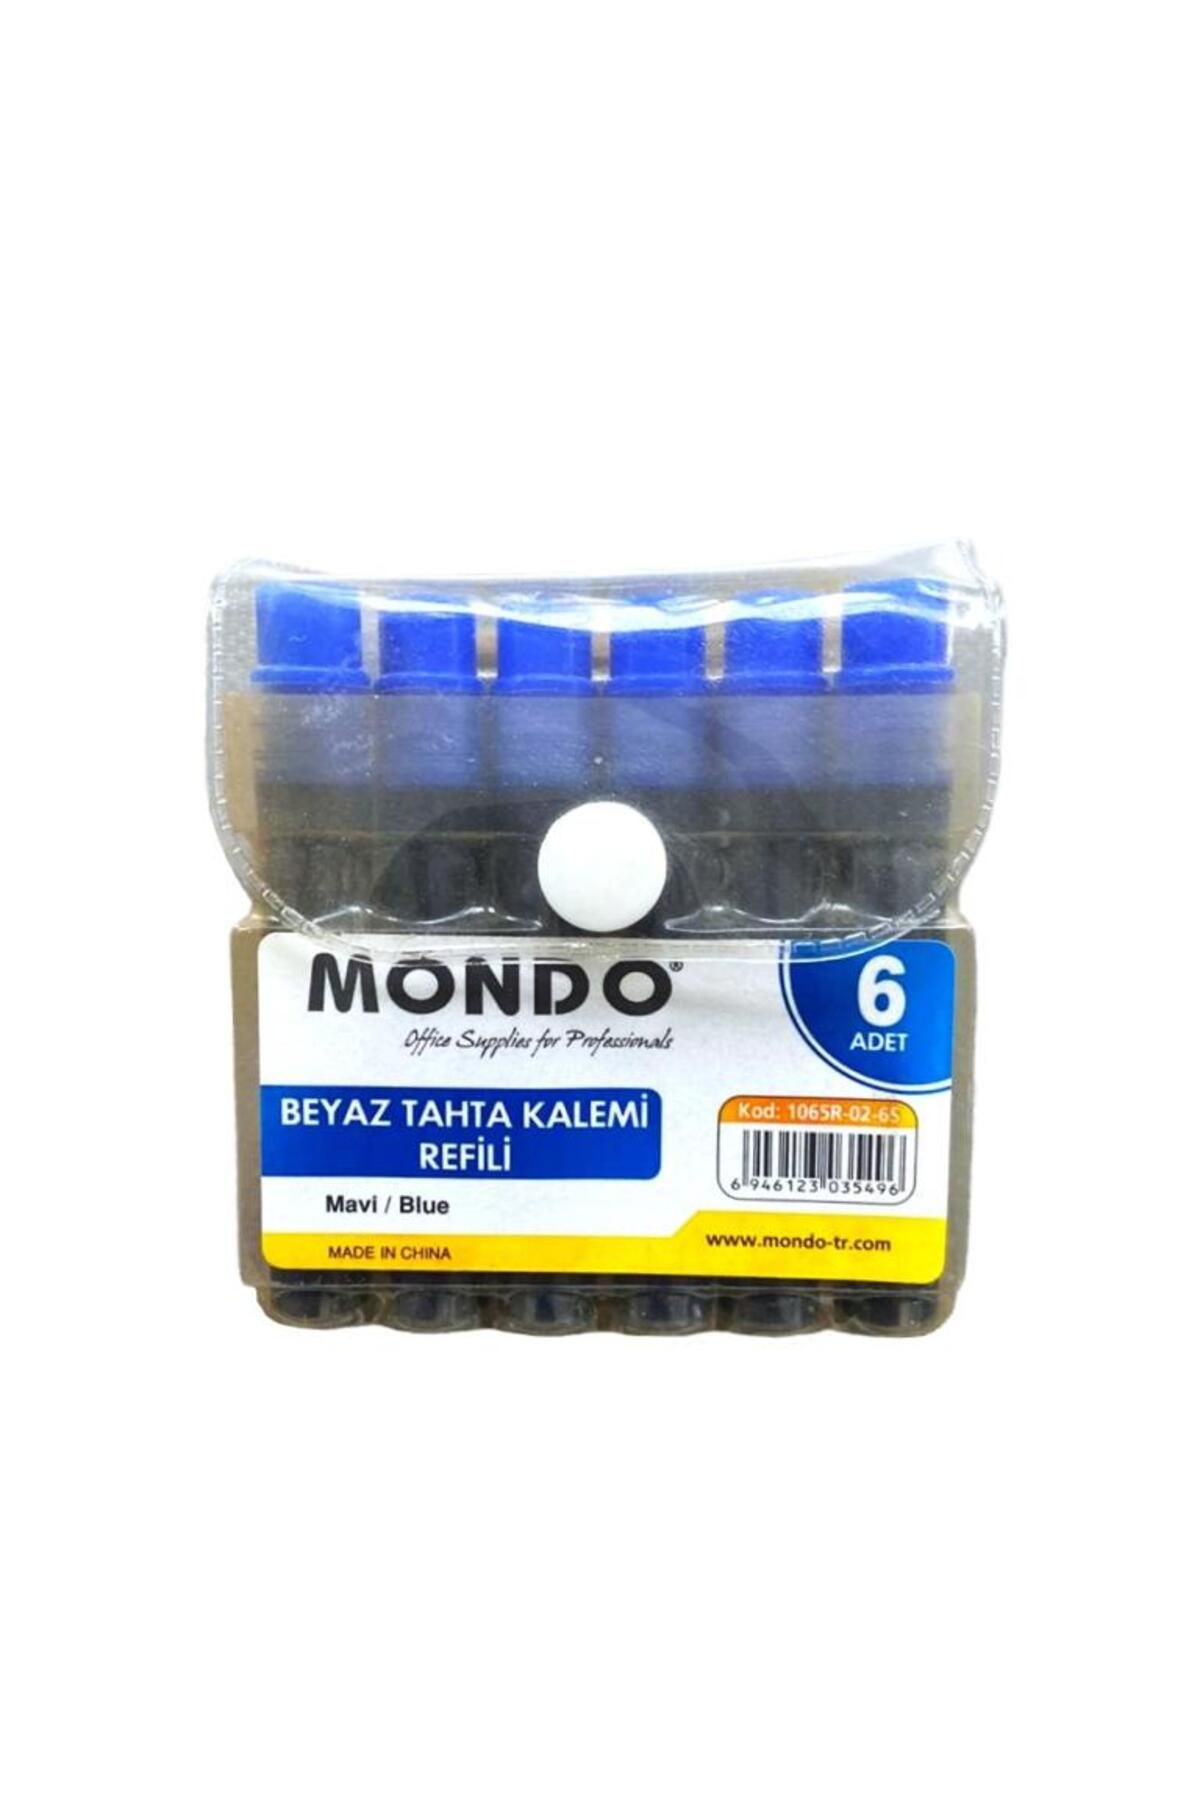 Mondo beyaz tahta kalem kartuşu mavi 6 lı set